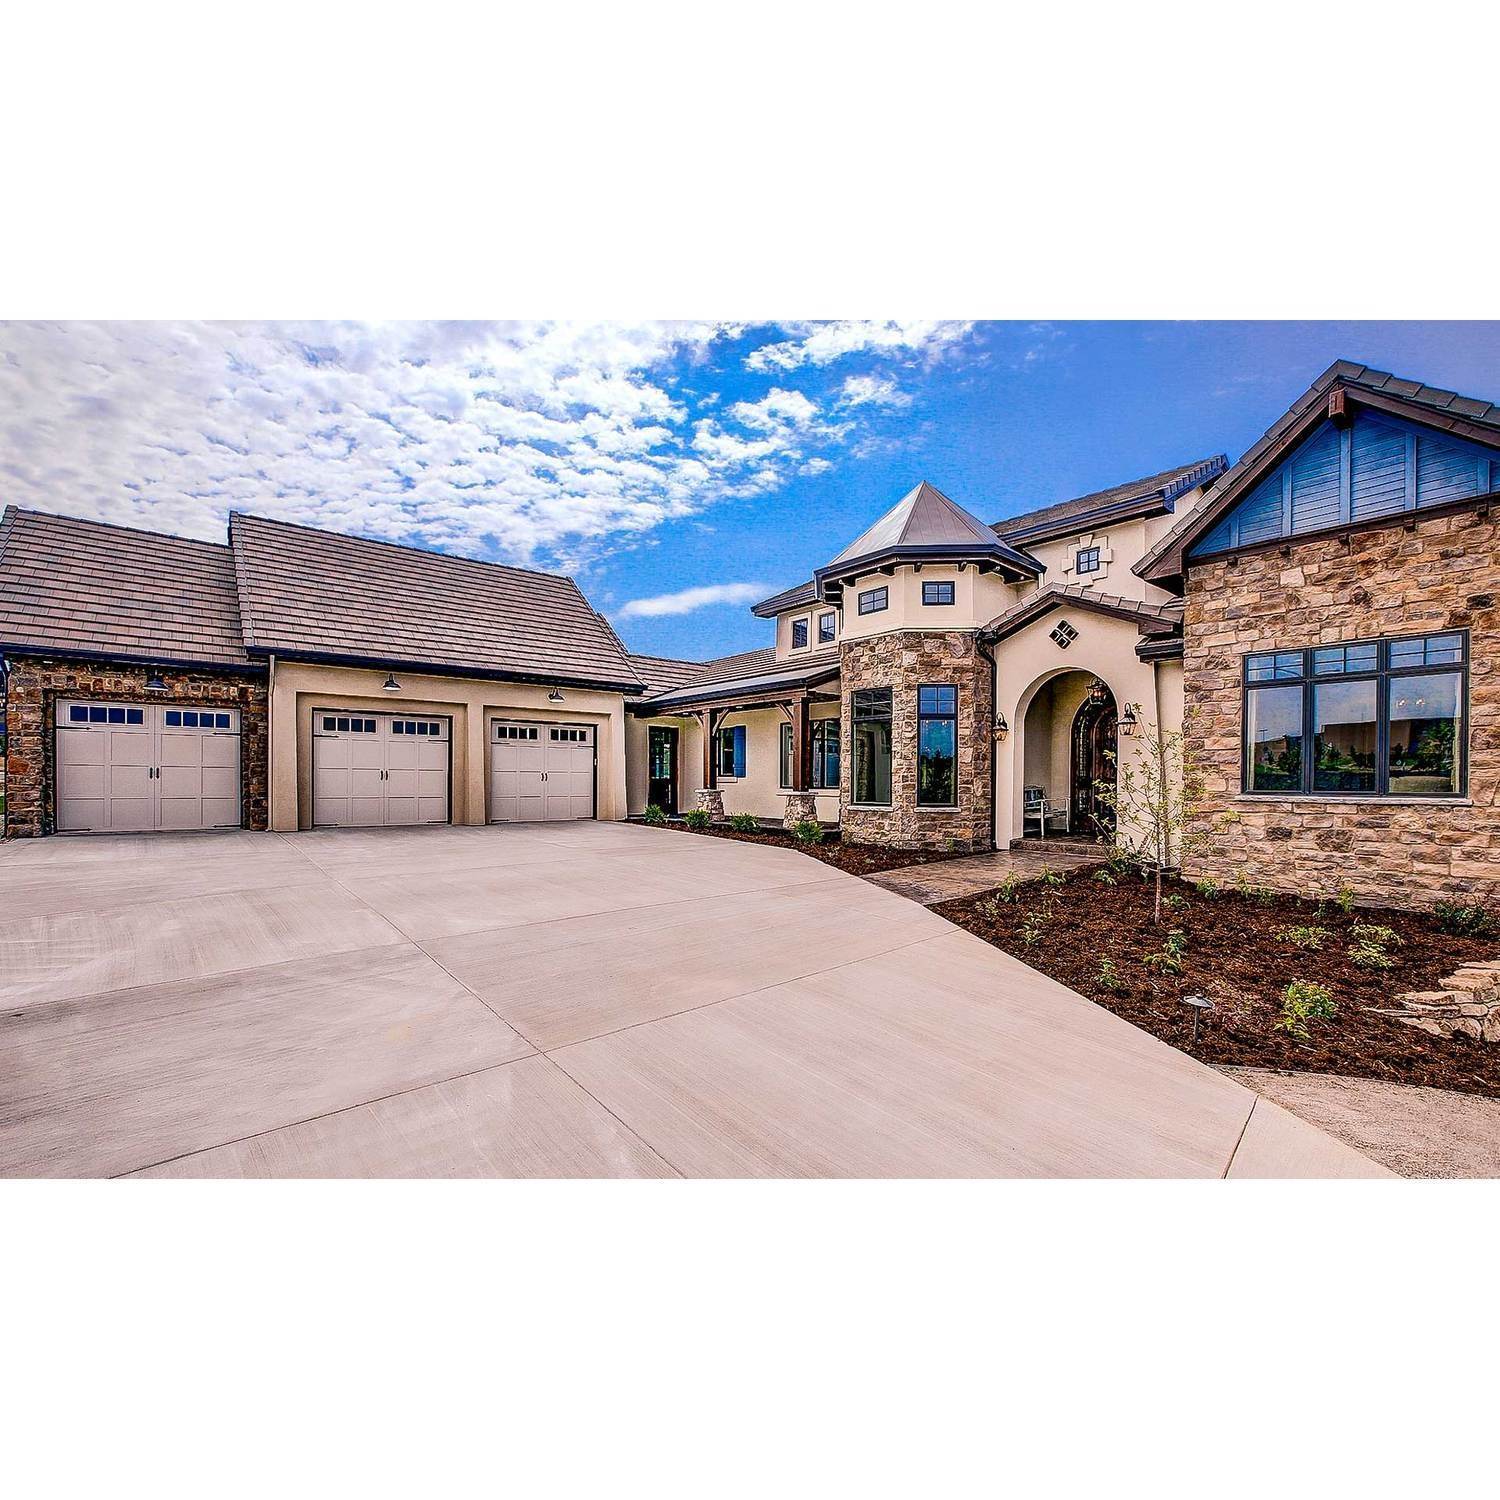 16. Galiant Homes building at 4783 Farmingdale Dr, Colorado Springs, CO 80918